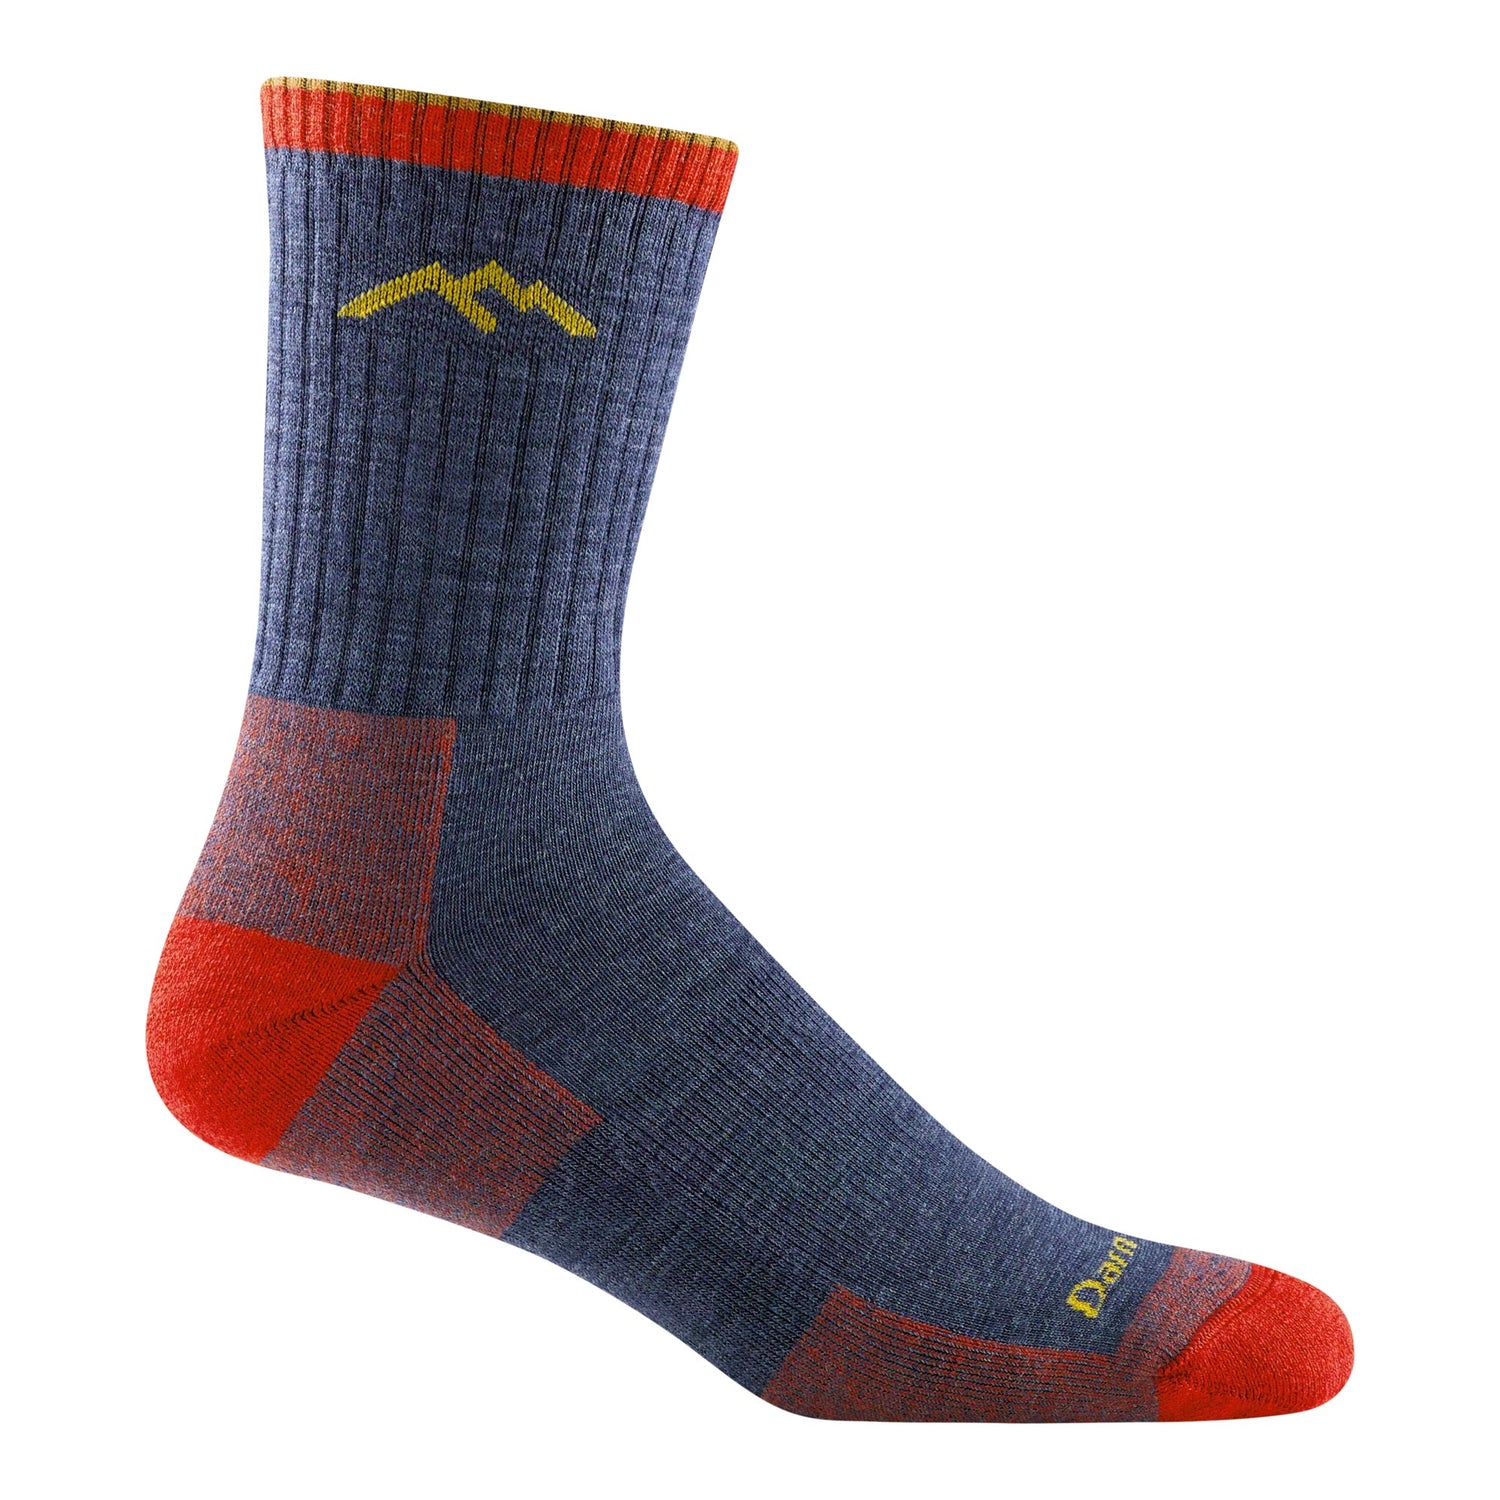 Darn Tough Socks - 1466 - Men&